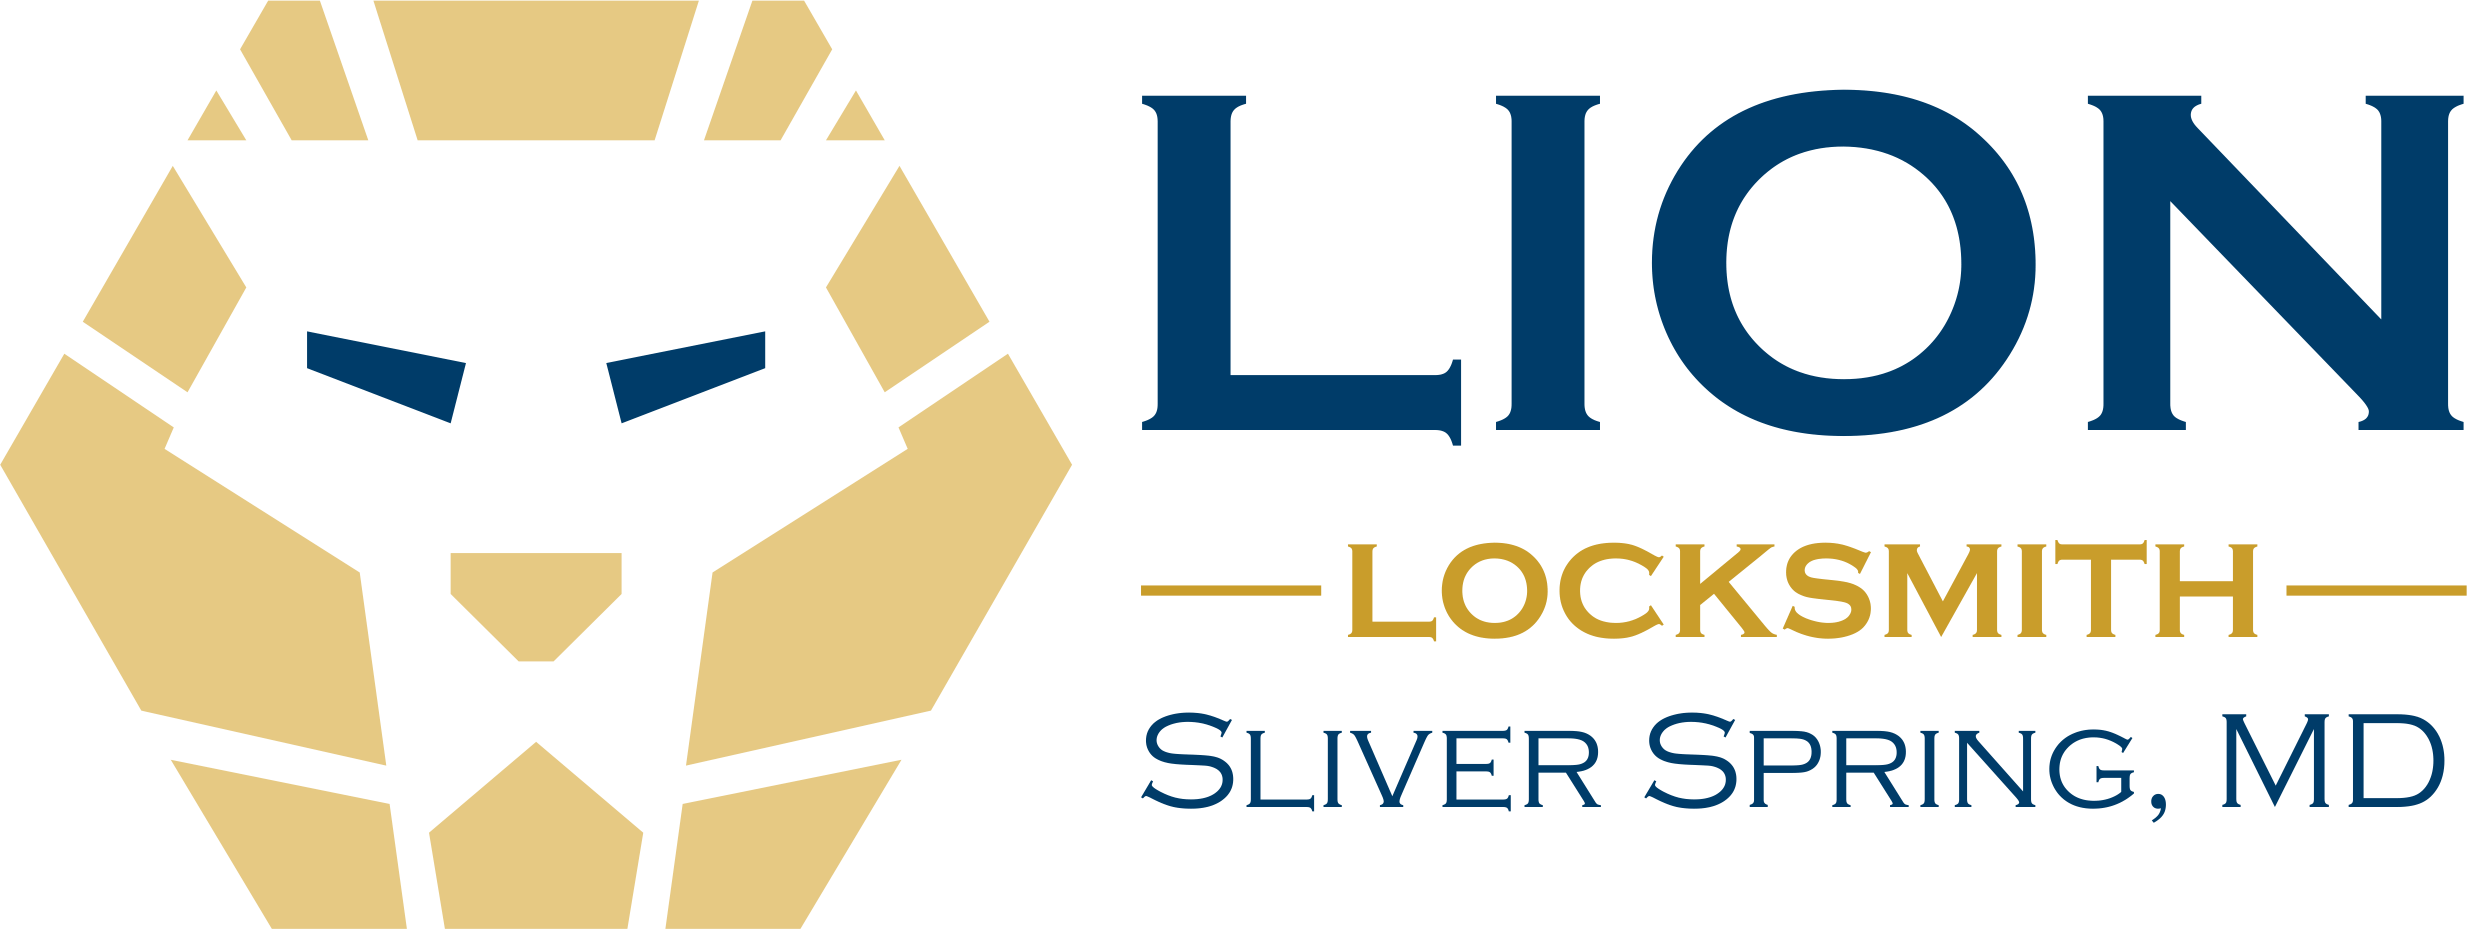 Lion Locksmith | Silver Spring, MD